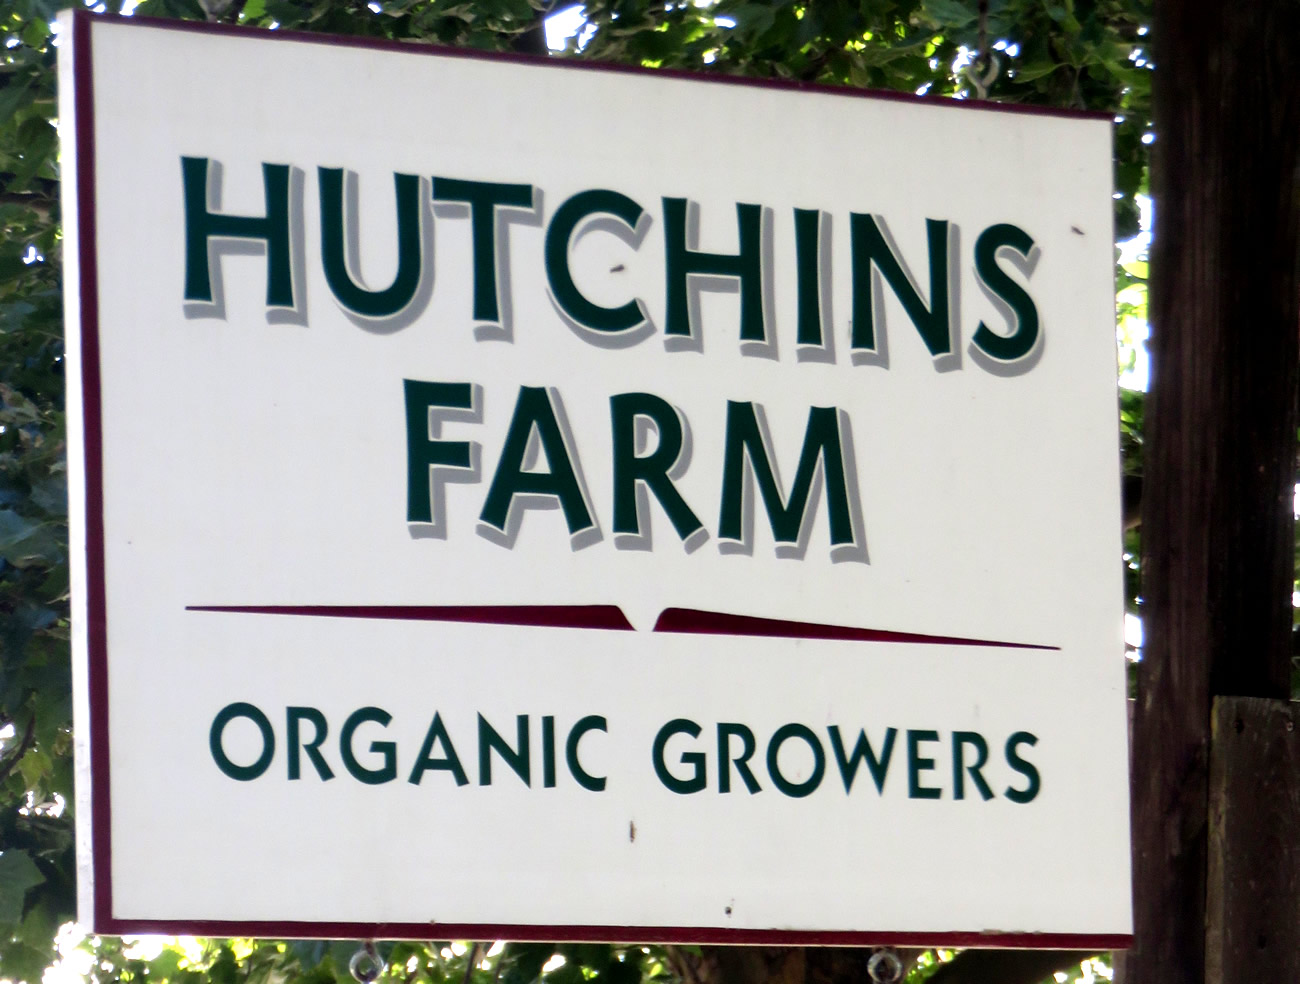 Hutchins Farm